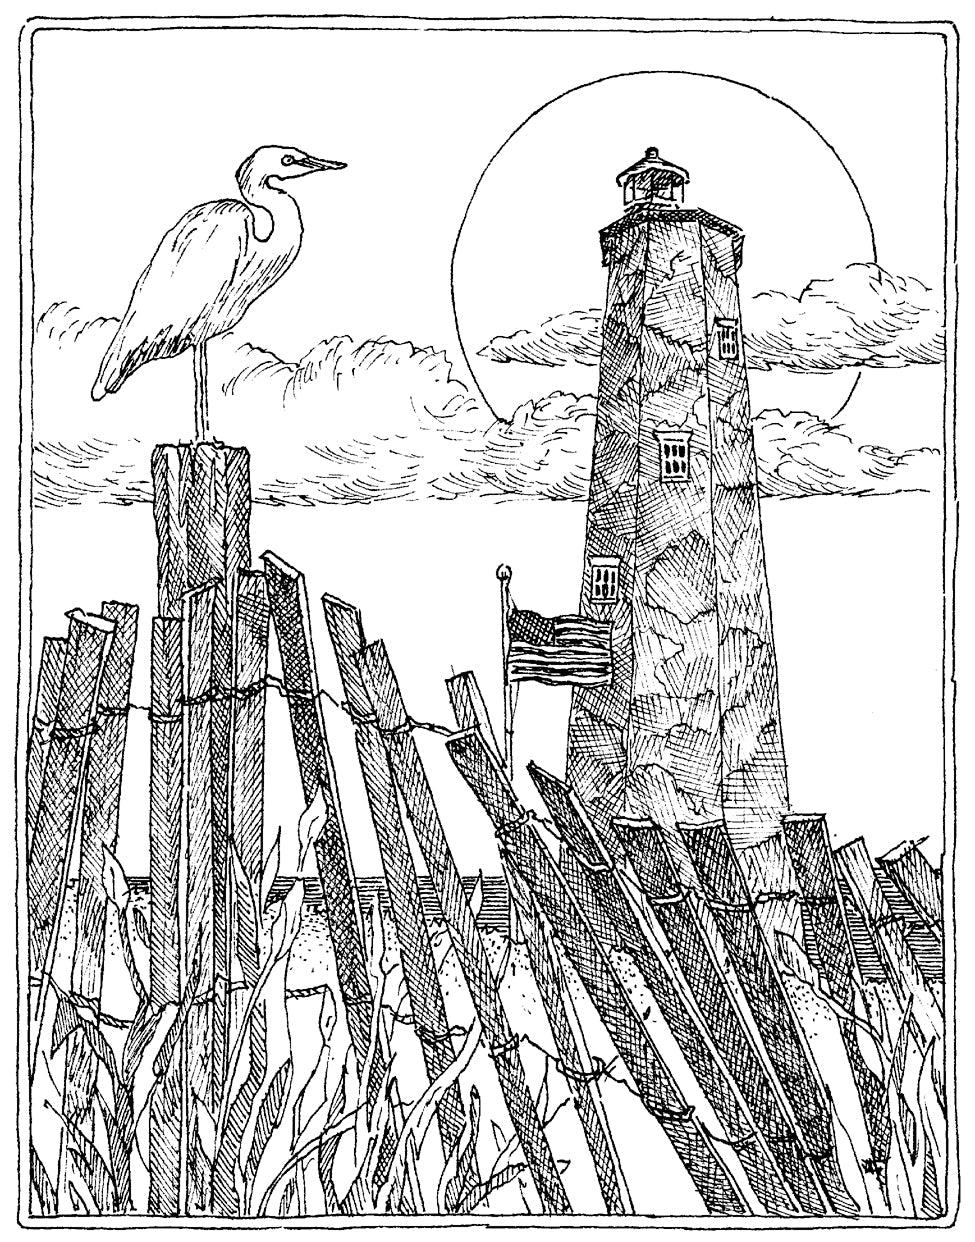 H1903-DG Bald Head Lighthouse